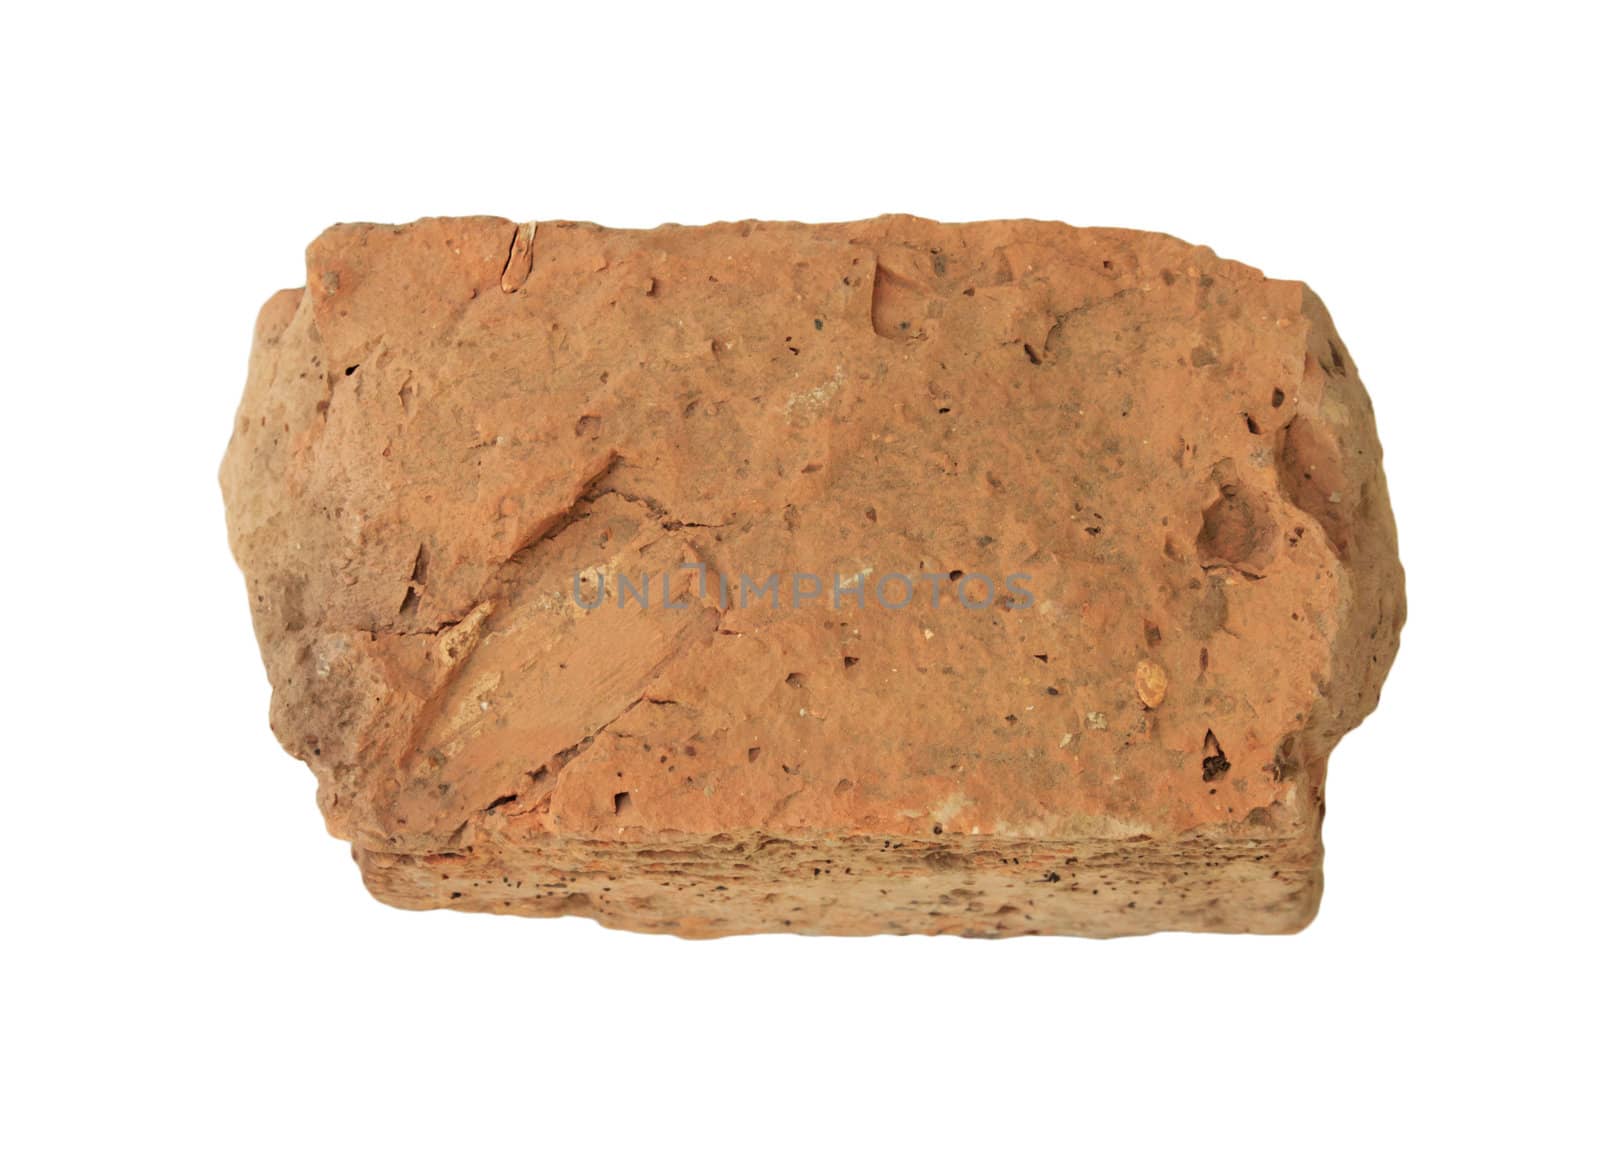 a piece of brick on a white background by schankz